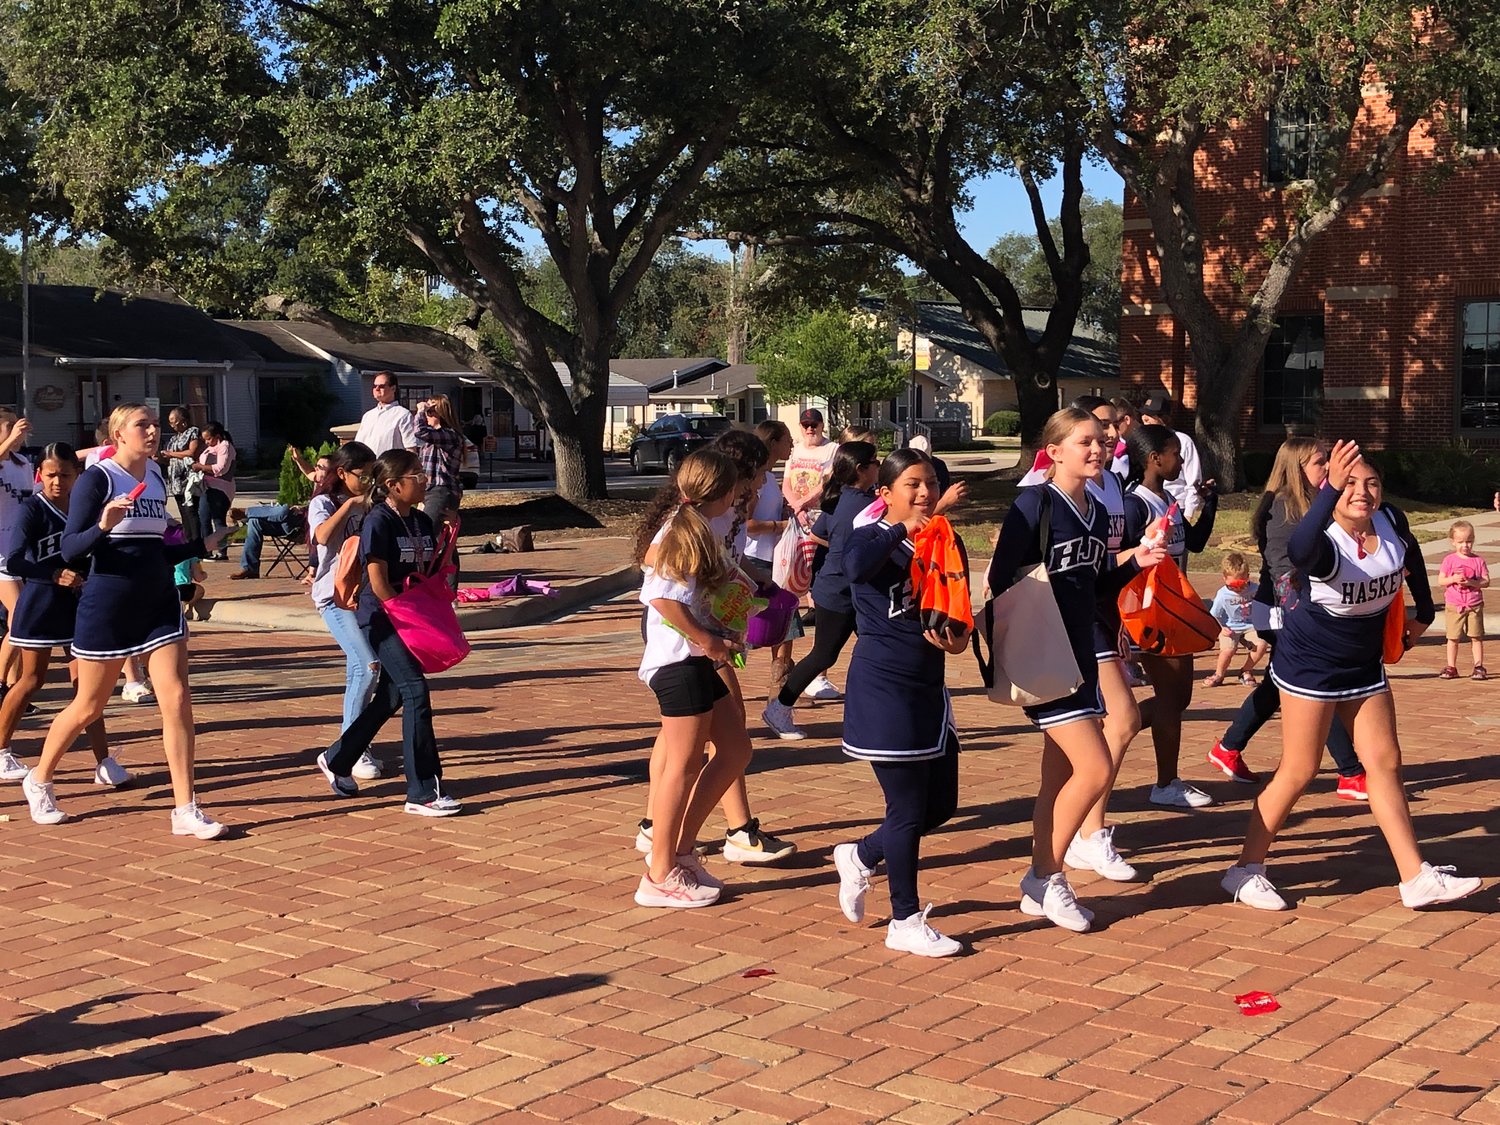 The Haskett Junior High cheerleaders enjoy their parade walk.